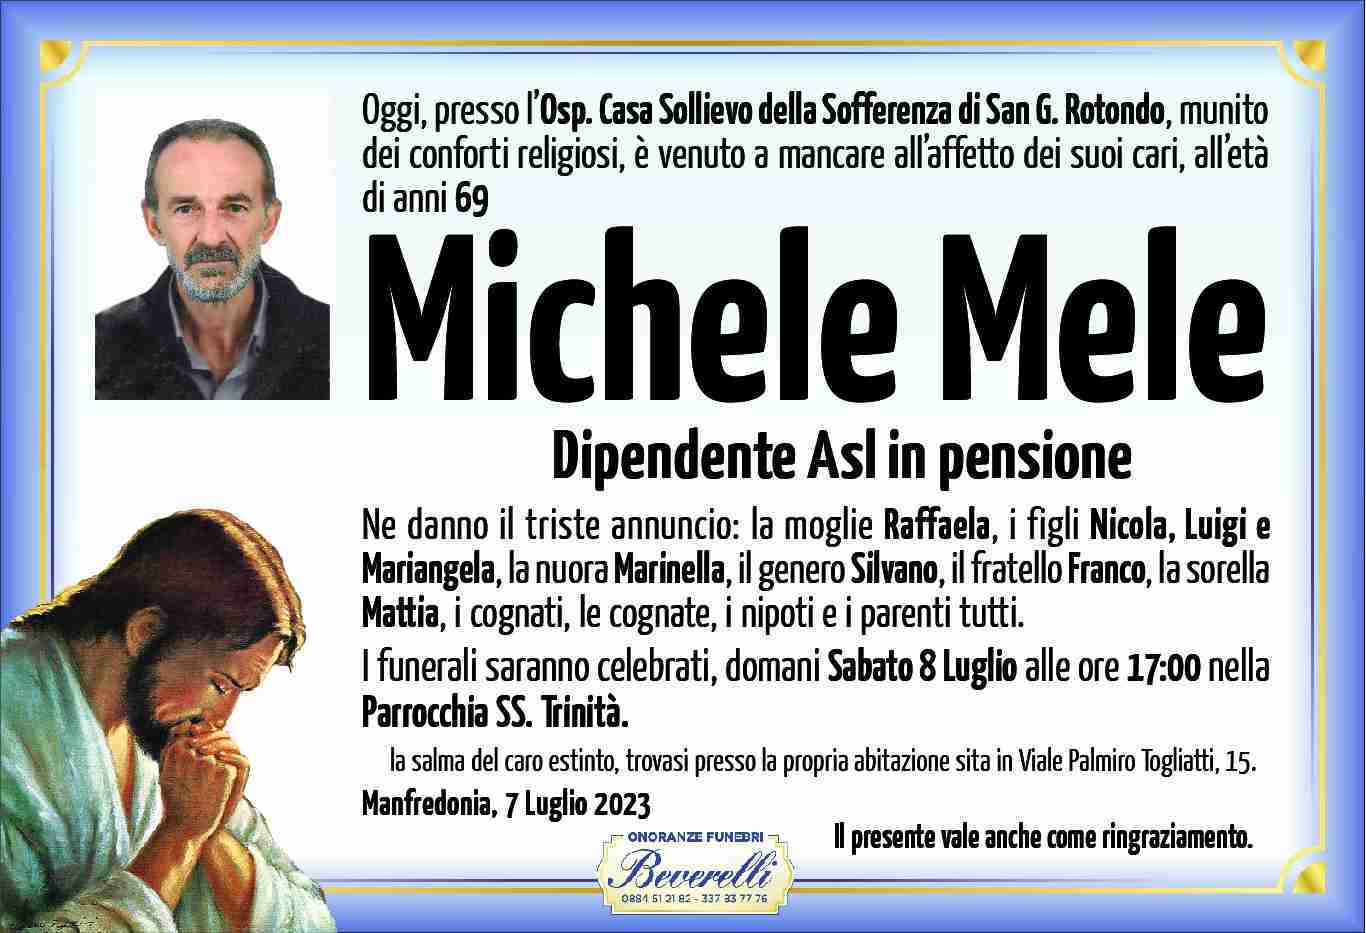 Michele Mele